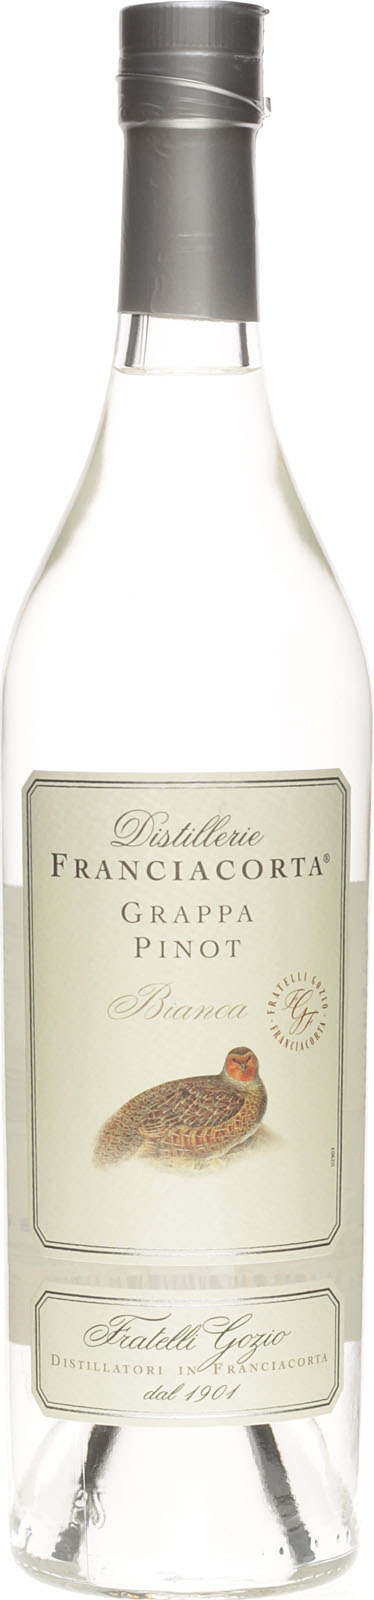 500ml Grappa Pinot 43% Franciacorta von